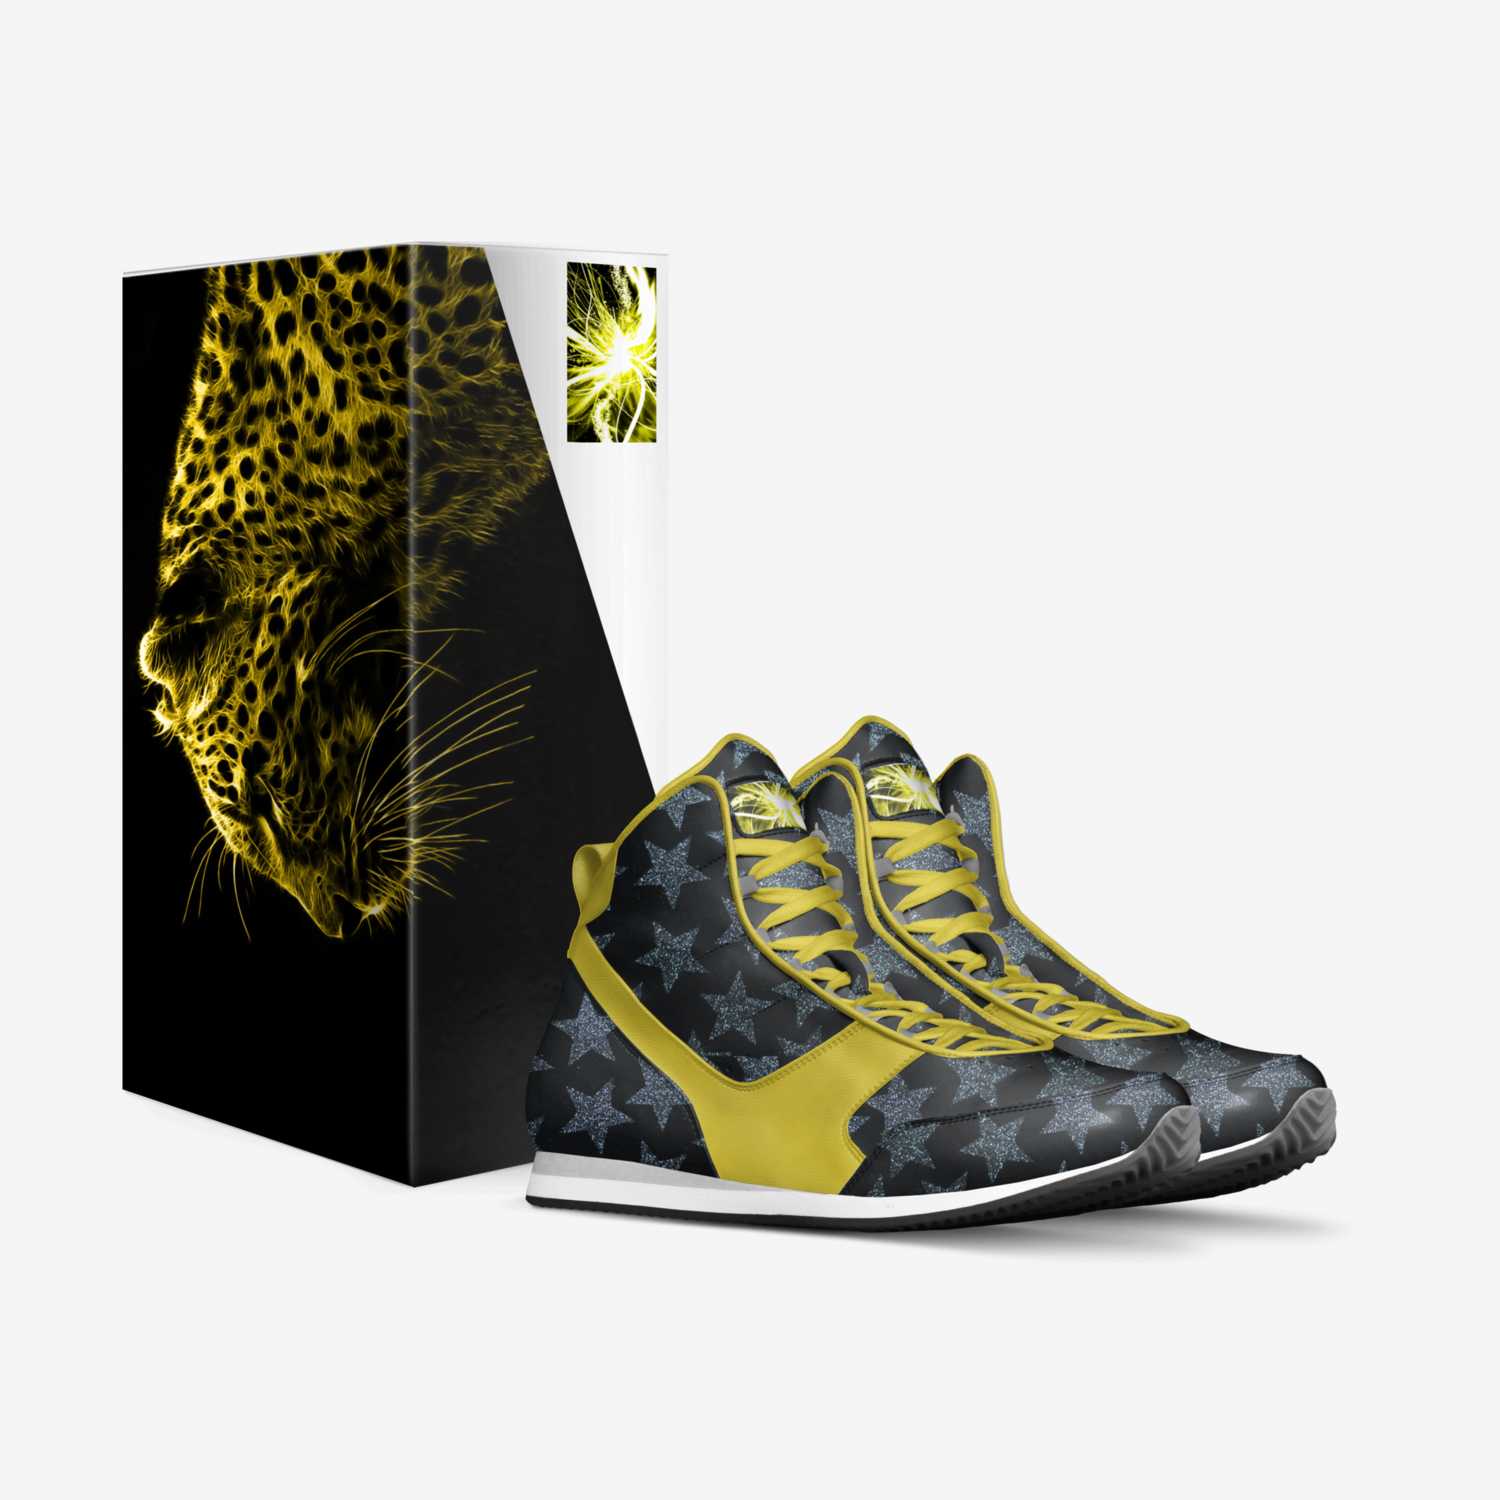 RAX custom made in Italy shoes by Jamyiah B | Box view